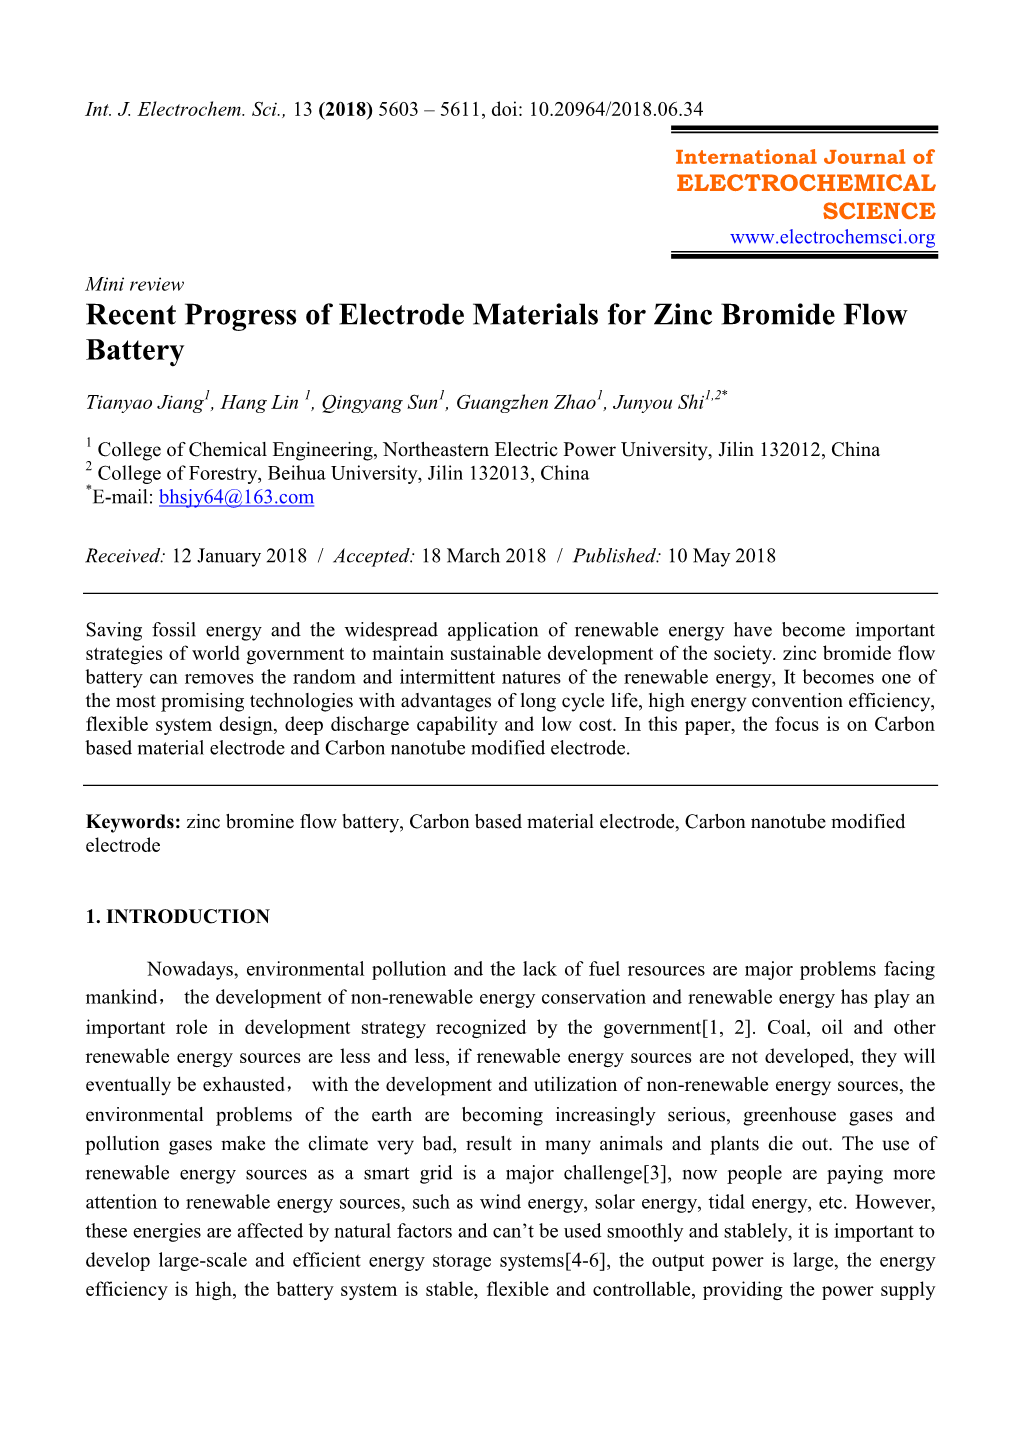 Recent Progress of Electrode Materials for Zinc Bromide Flow Battery